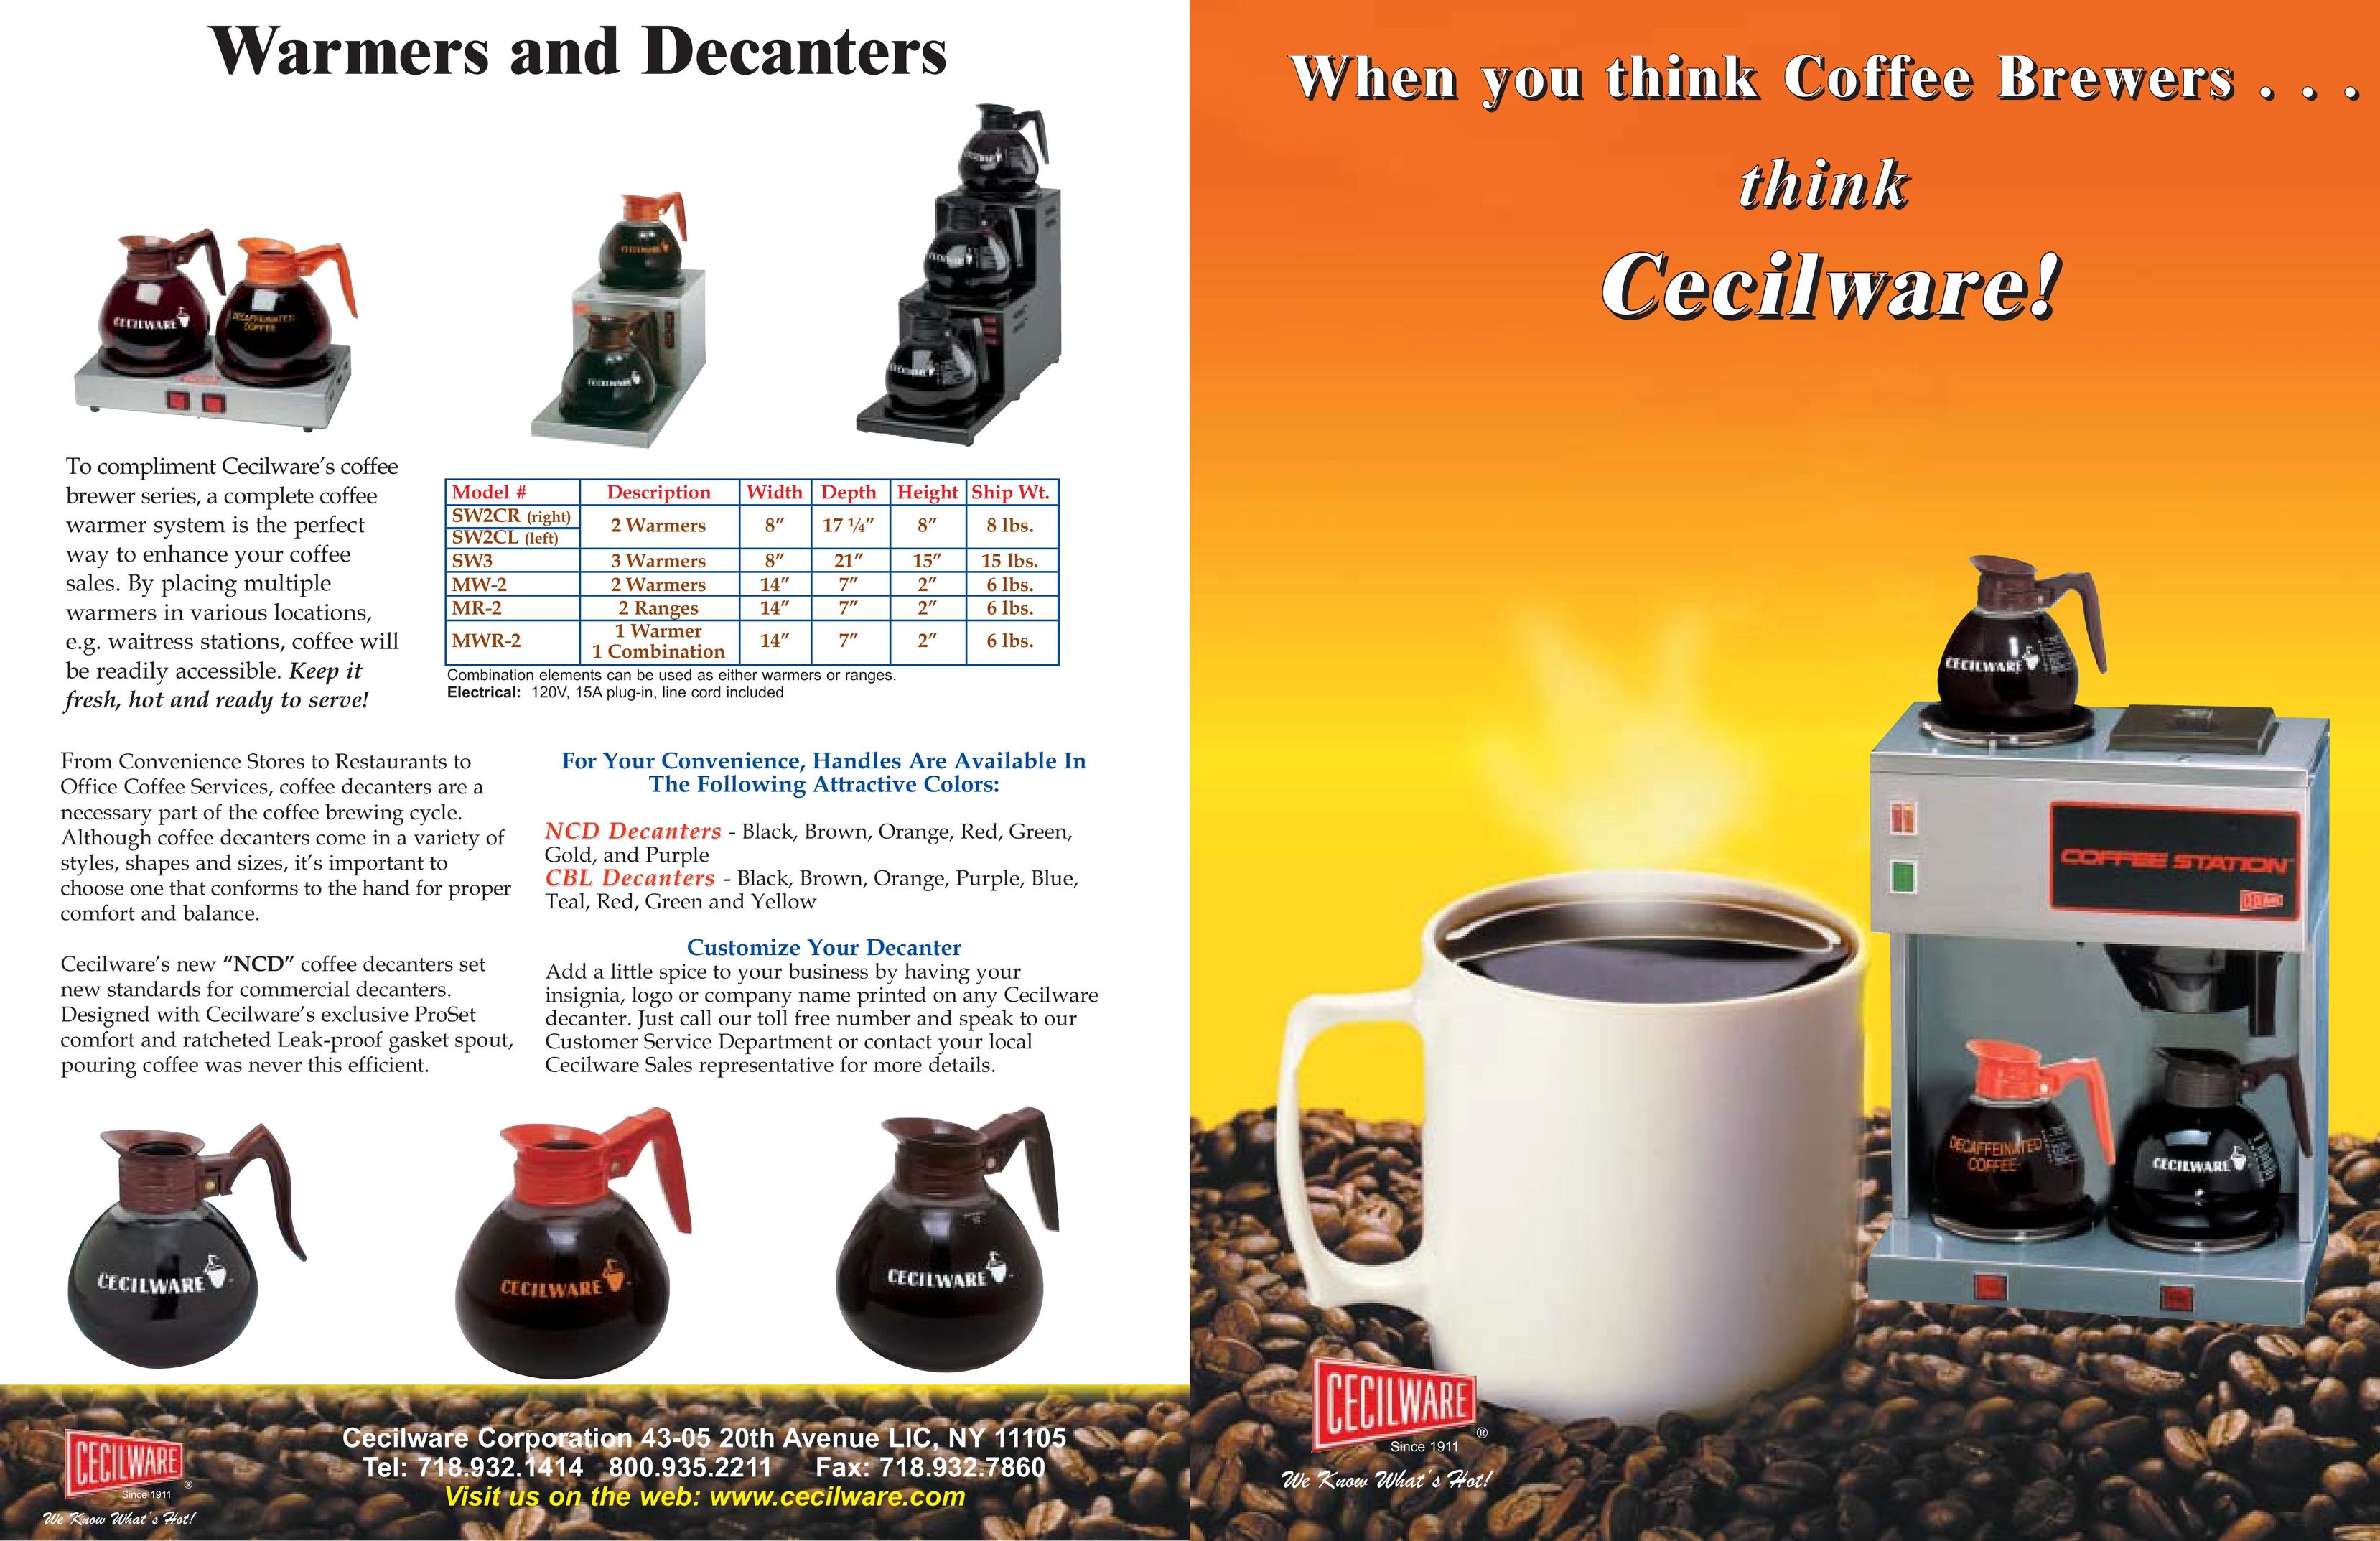 Cecilware BT-3A 3 25" 29 lbs. Coffeemaker User Manual